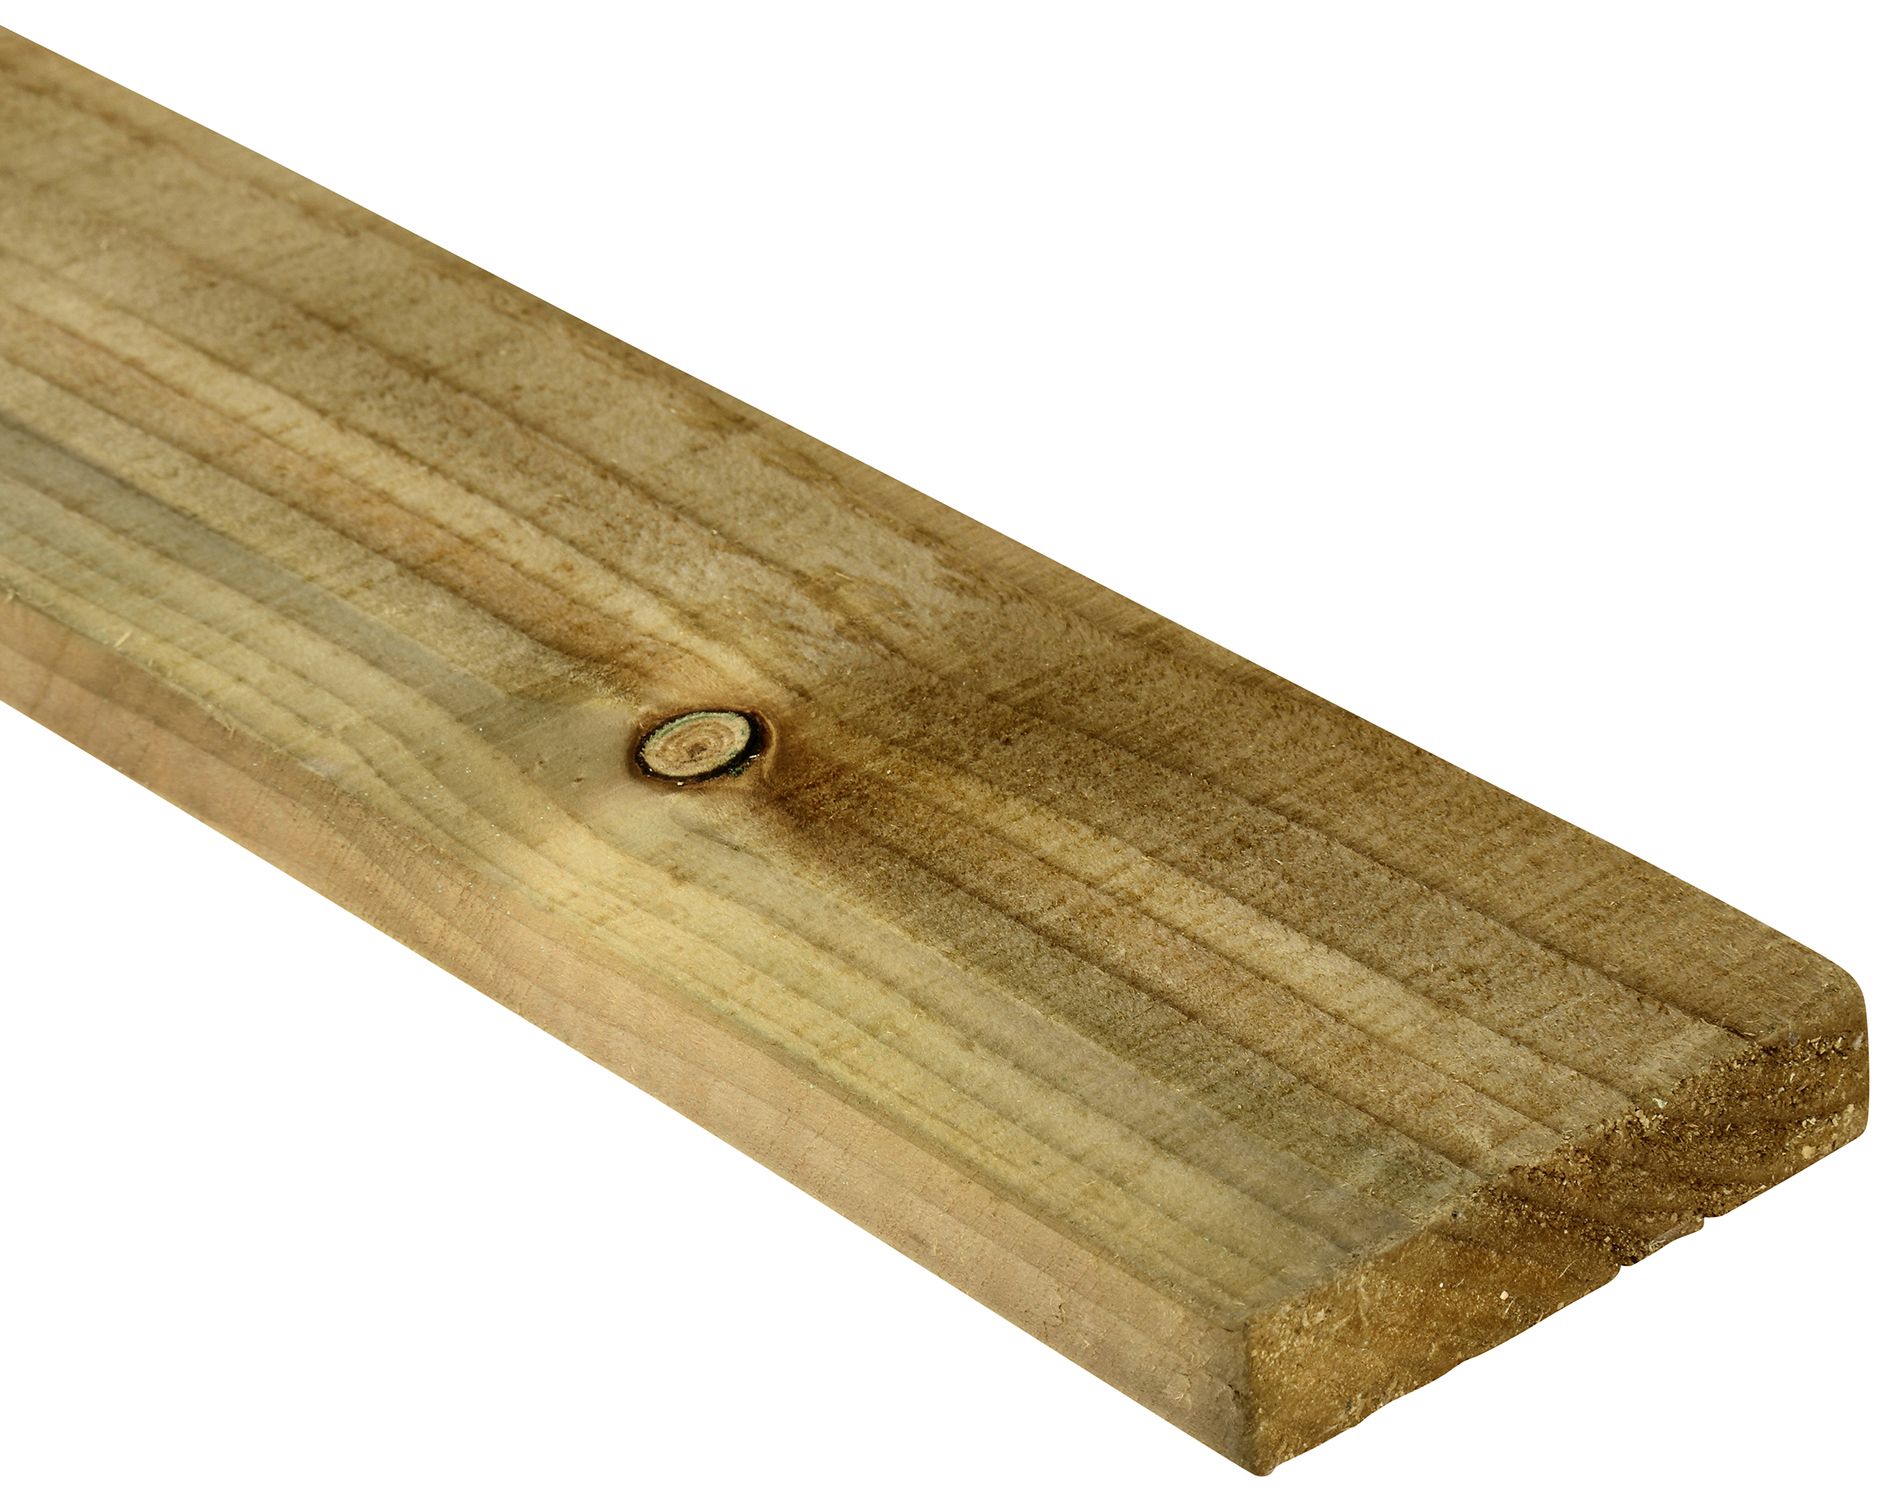 Wickes Treated Sawn Timber - 22 x 100 x 2400mm